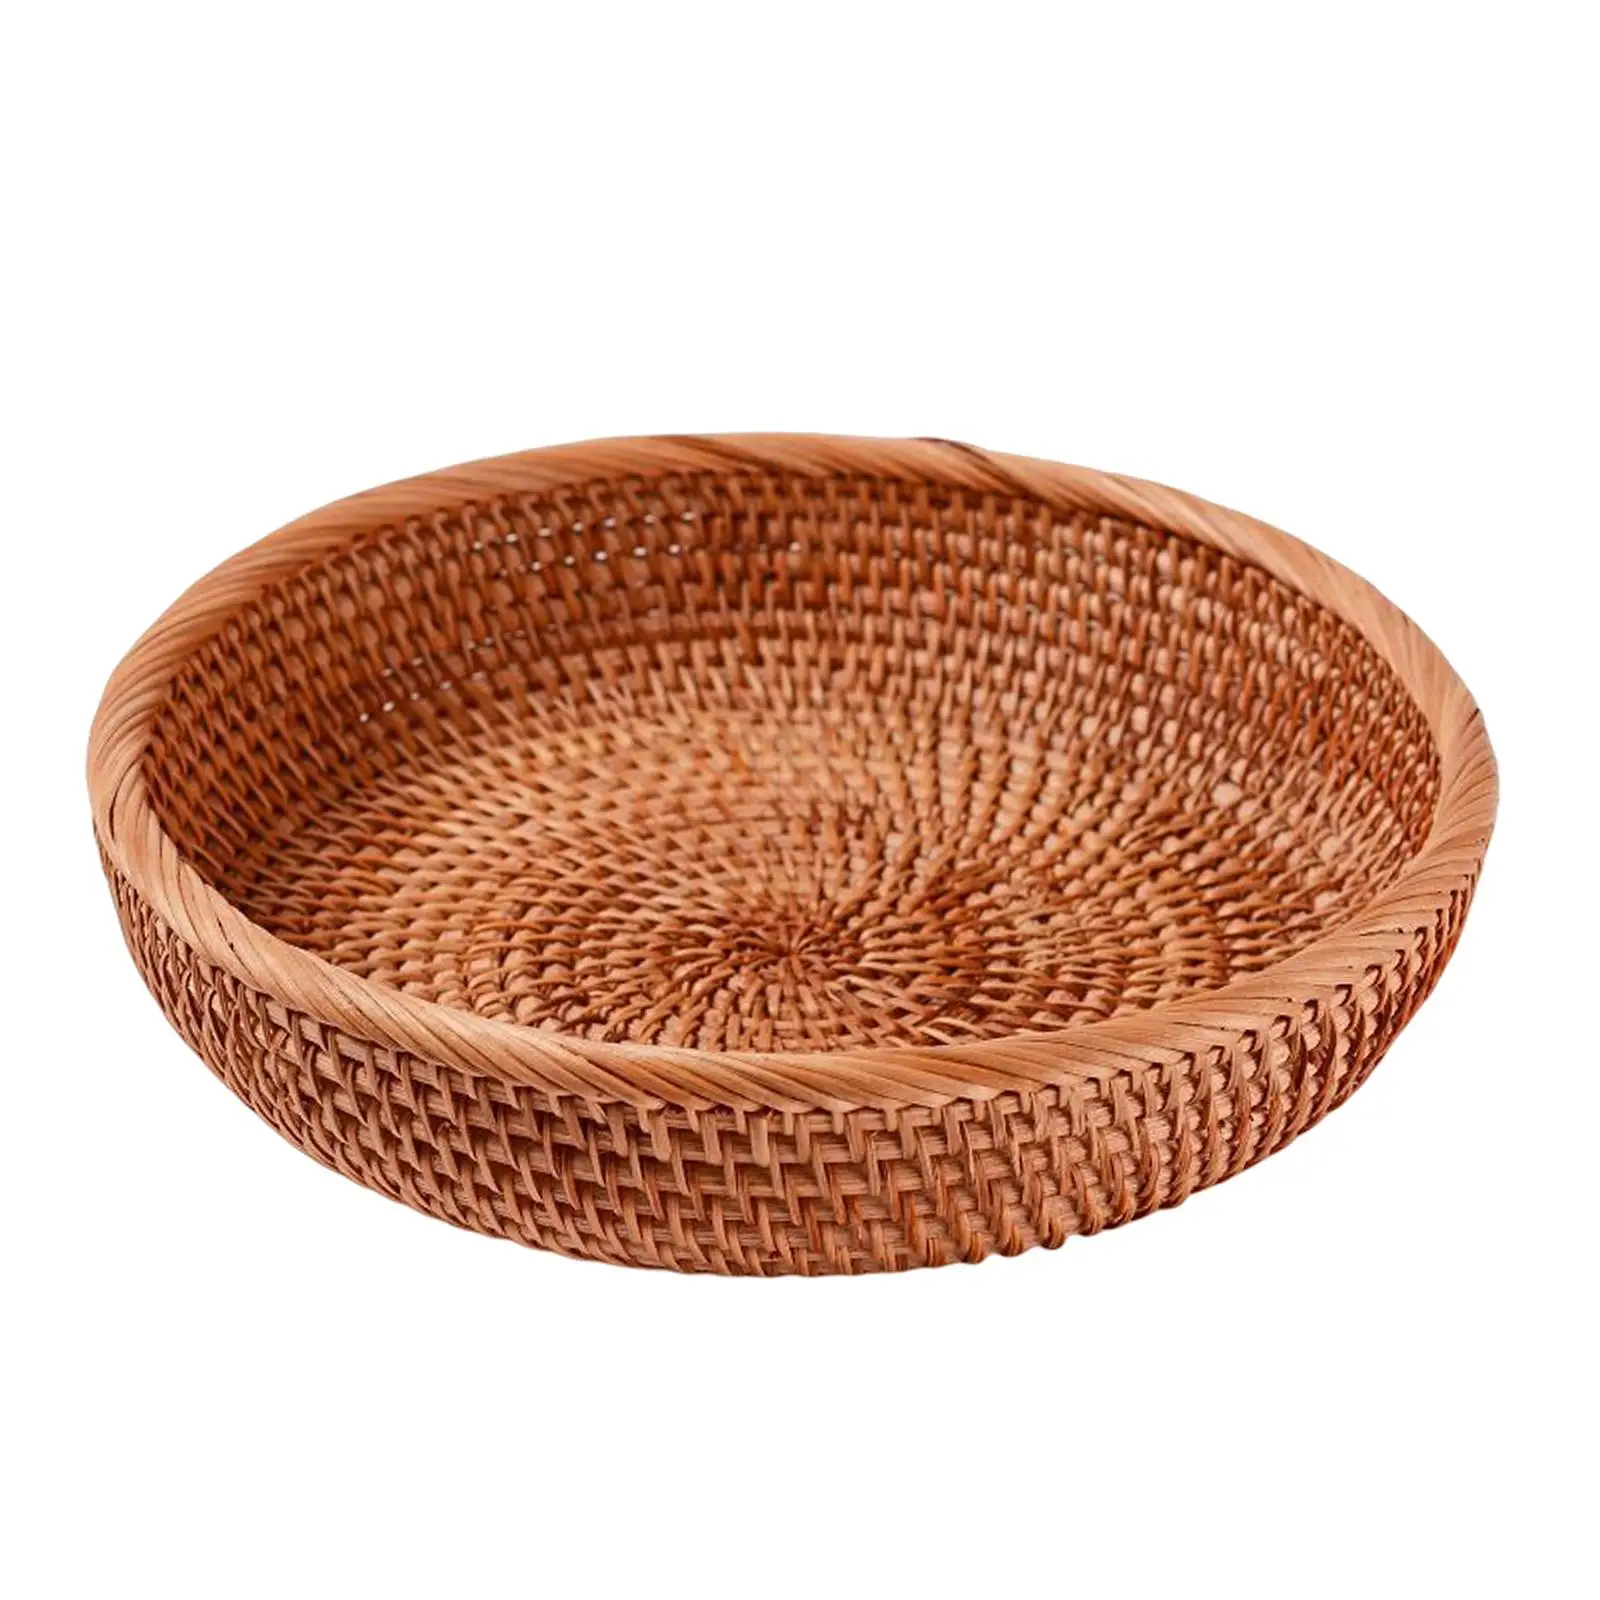 Wicker Bowl Wicker Fruit Basket Tabletop Decorative, handwoven storage Tray